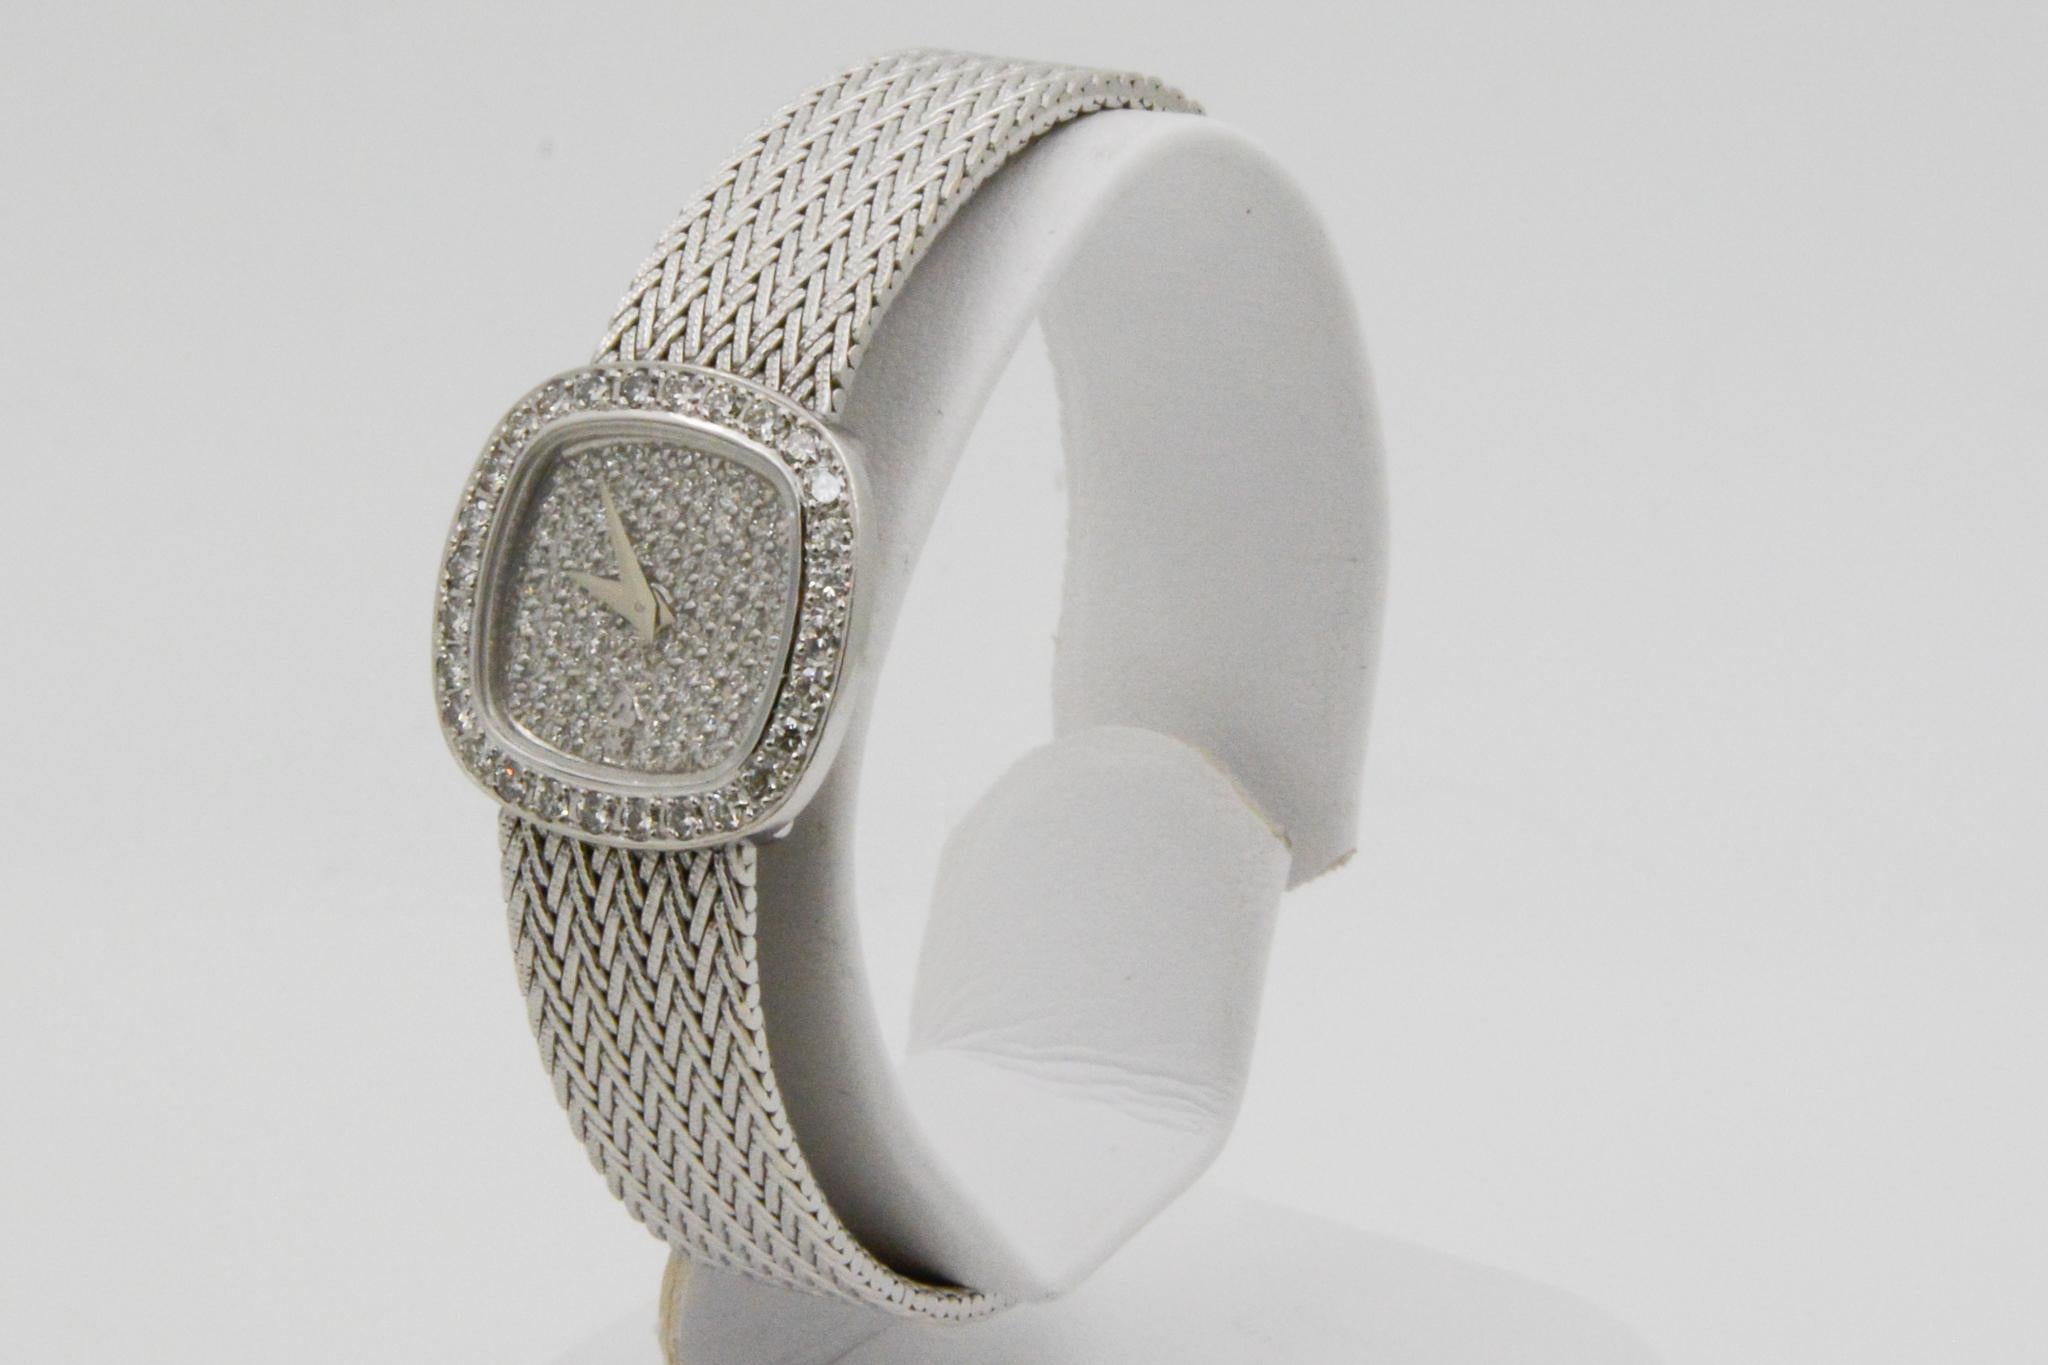 Model: Corum Diamond Watch #14234.69P57
Movement: Manual Wind 
Case Material: 18k White Gold 
Dial: Cushion Shape Pave Diamond, Round Brilliant Cut Diamond Bezel 
Strap: Five Row Mesh 
Circa 1970, No box, No papers